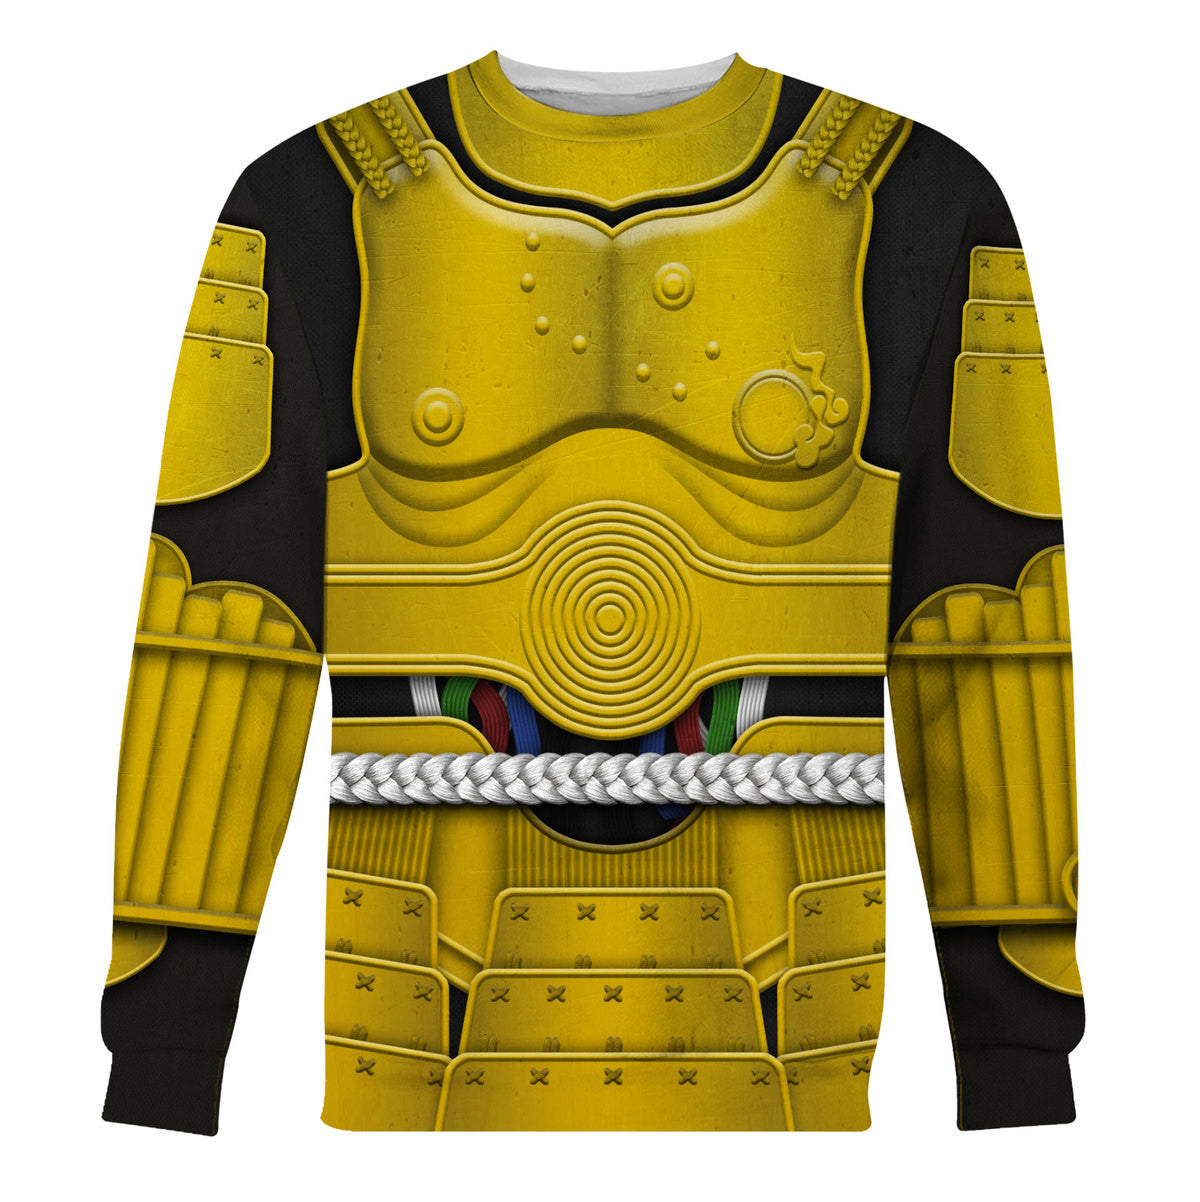 Star Wars C-3PO Samurai Costume - Sweater - Ugly Christmas Sweater